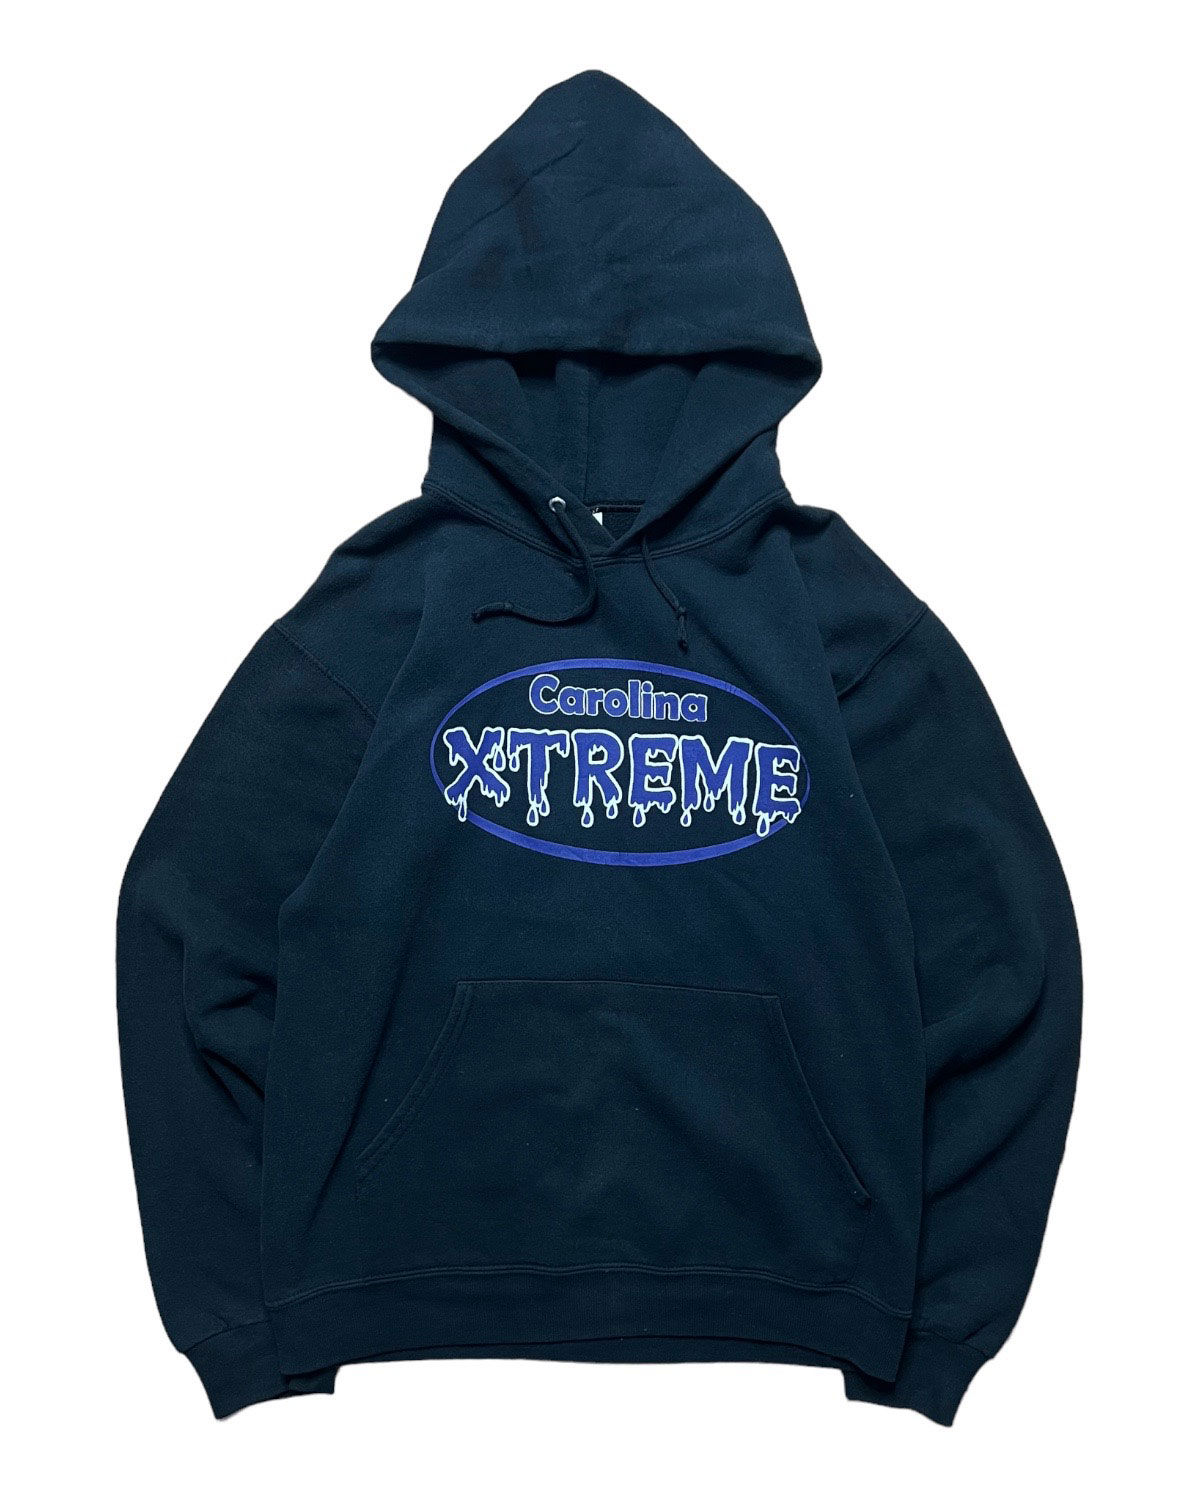 Vintage Carolina xtreme hoodie